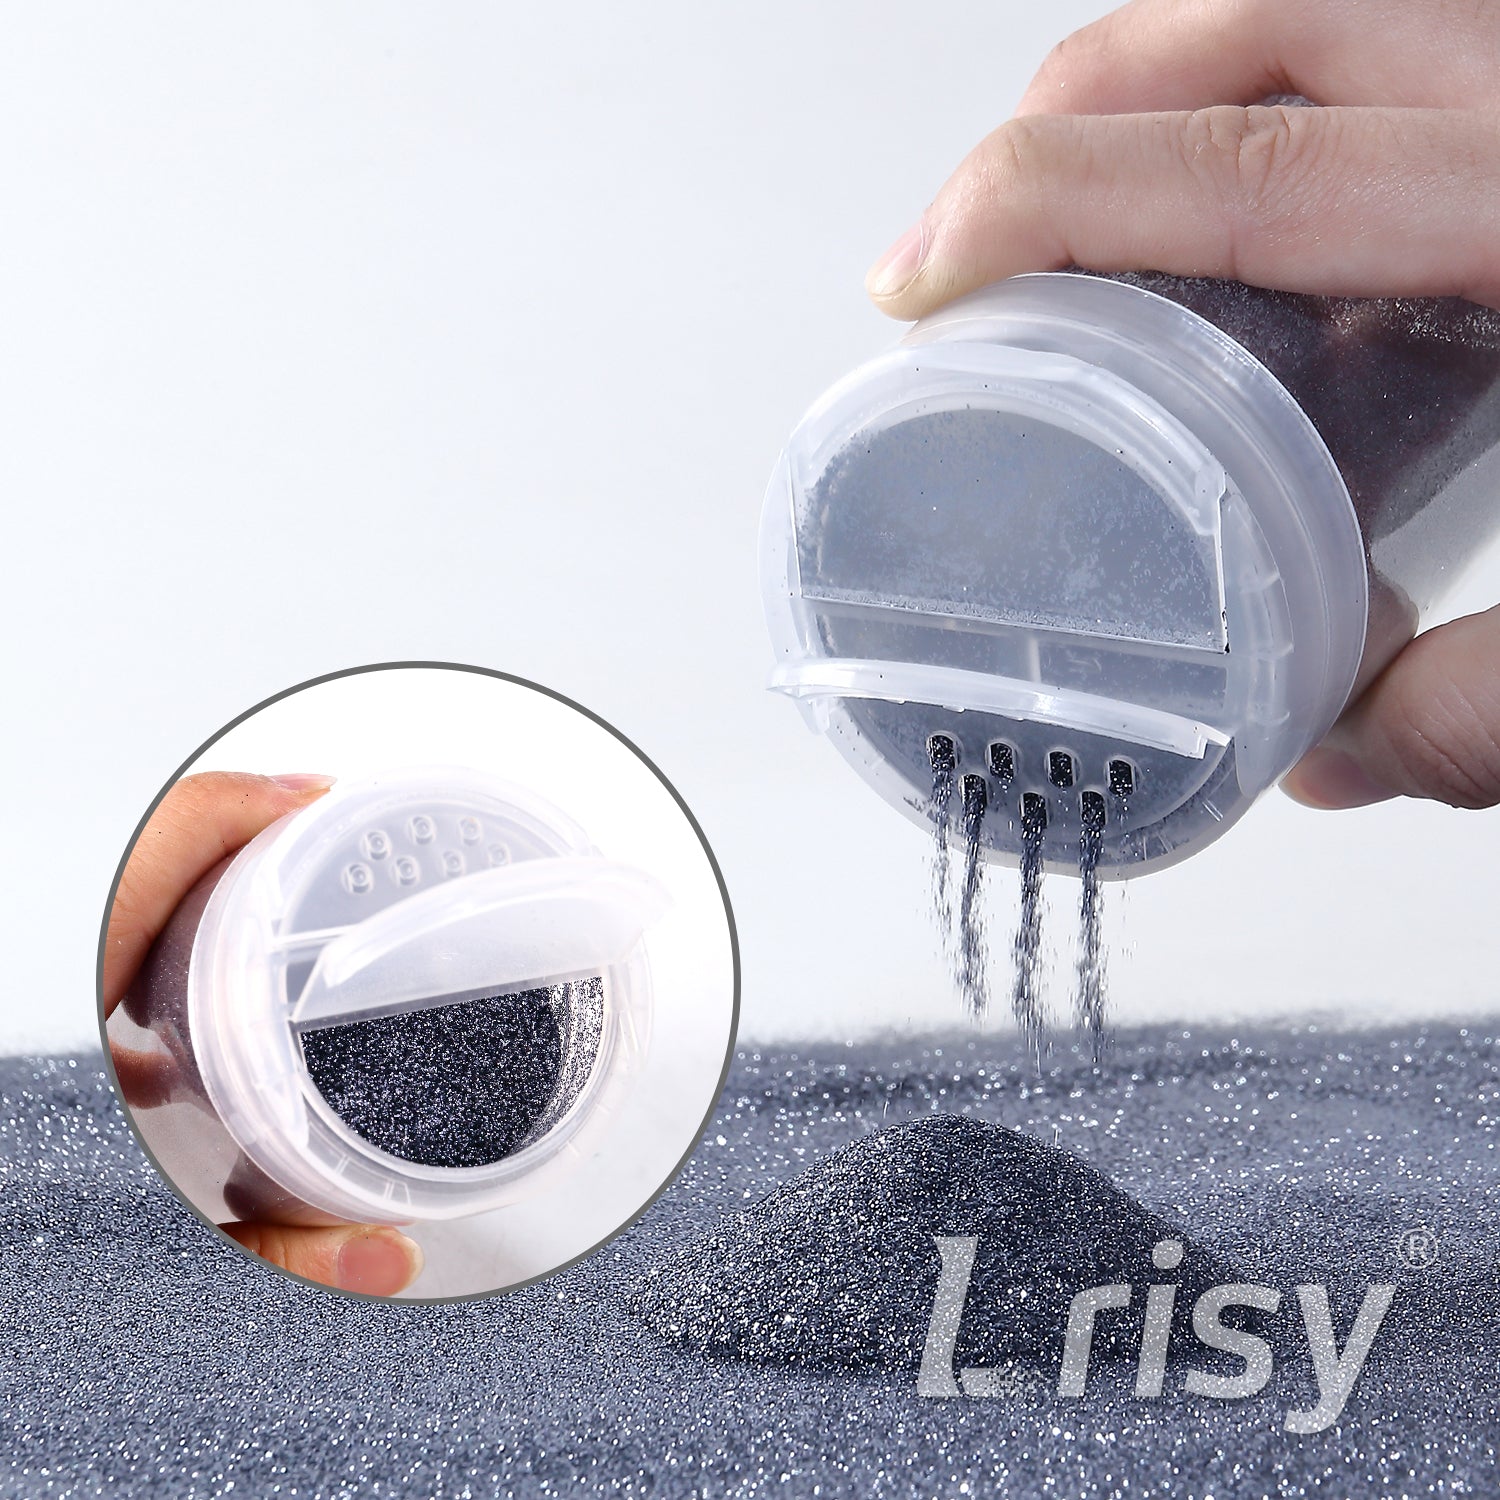 Lrisy Extra Fine Powder Metallic Glitter 140g/4.5oz with Shaker Lid(Extra Thin Traffic Grey/B01002)